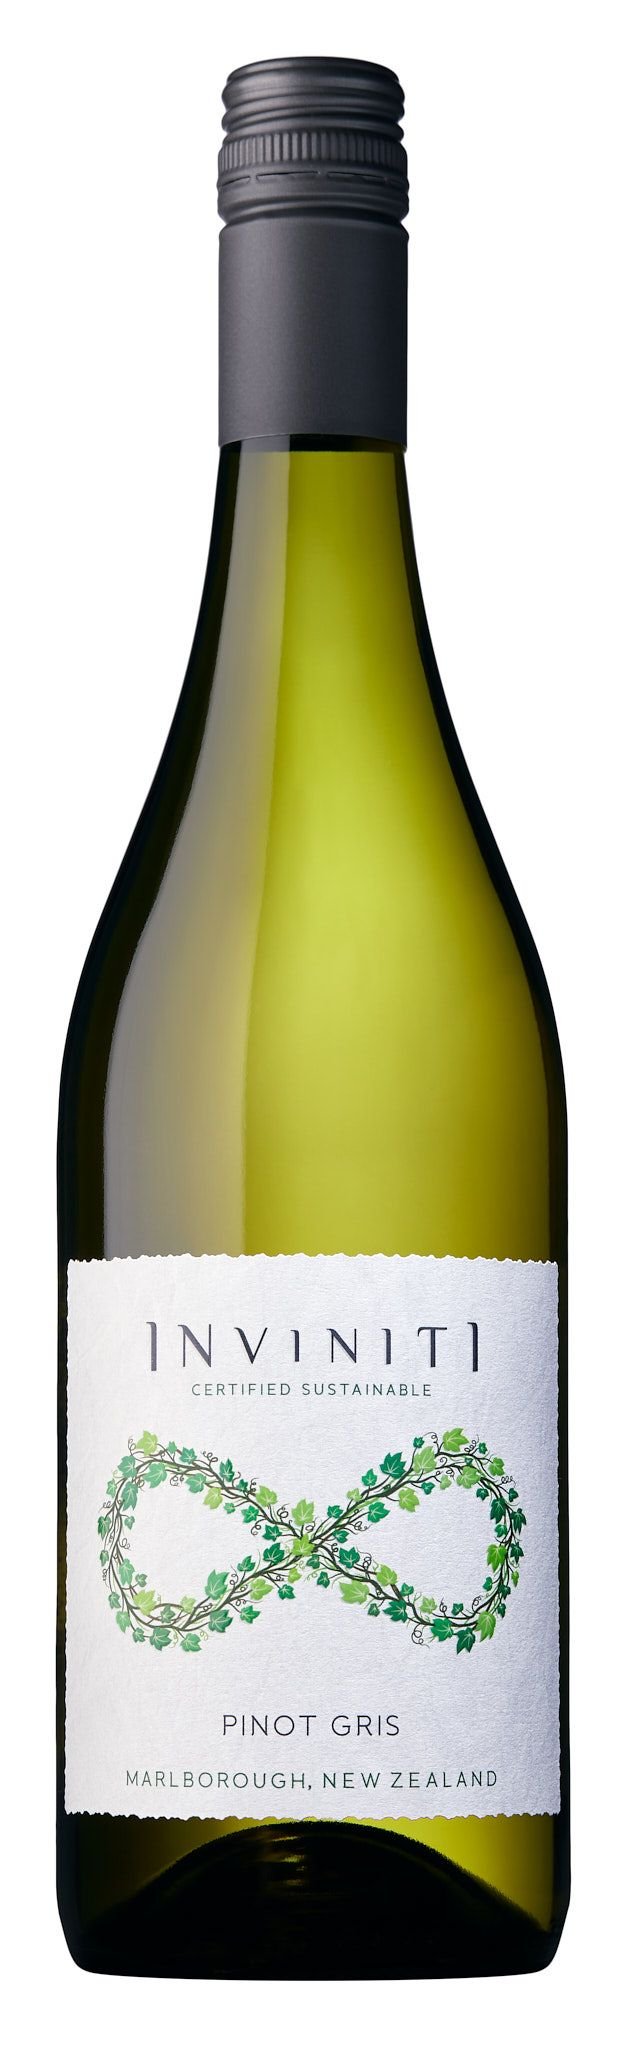 Inviniti Pinot Gris 22 - Wine NZ White - Liquor Wine Cave